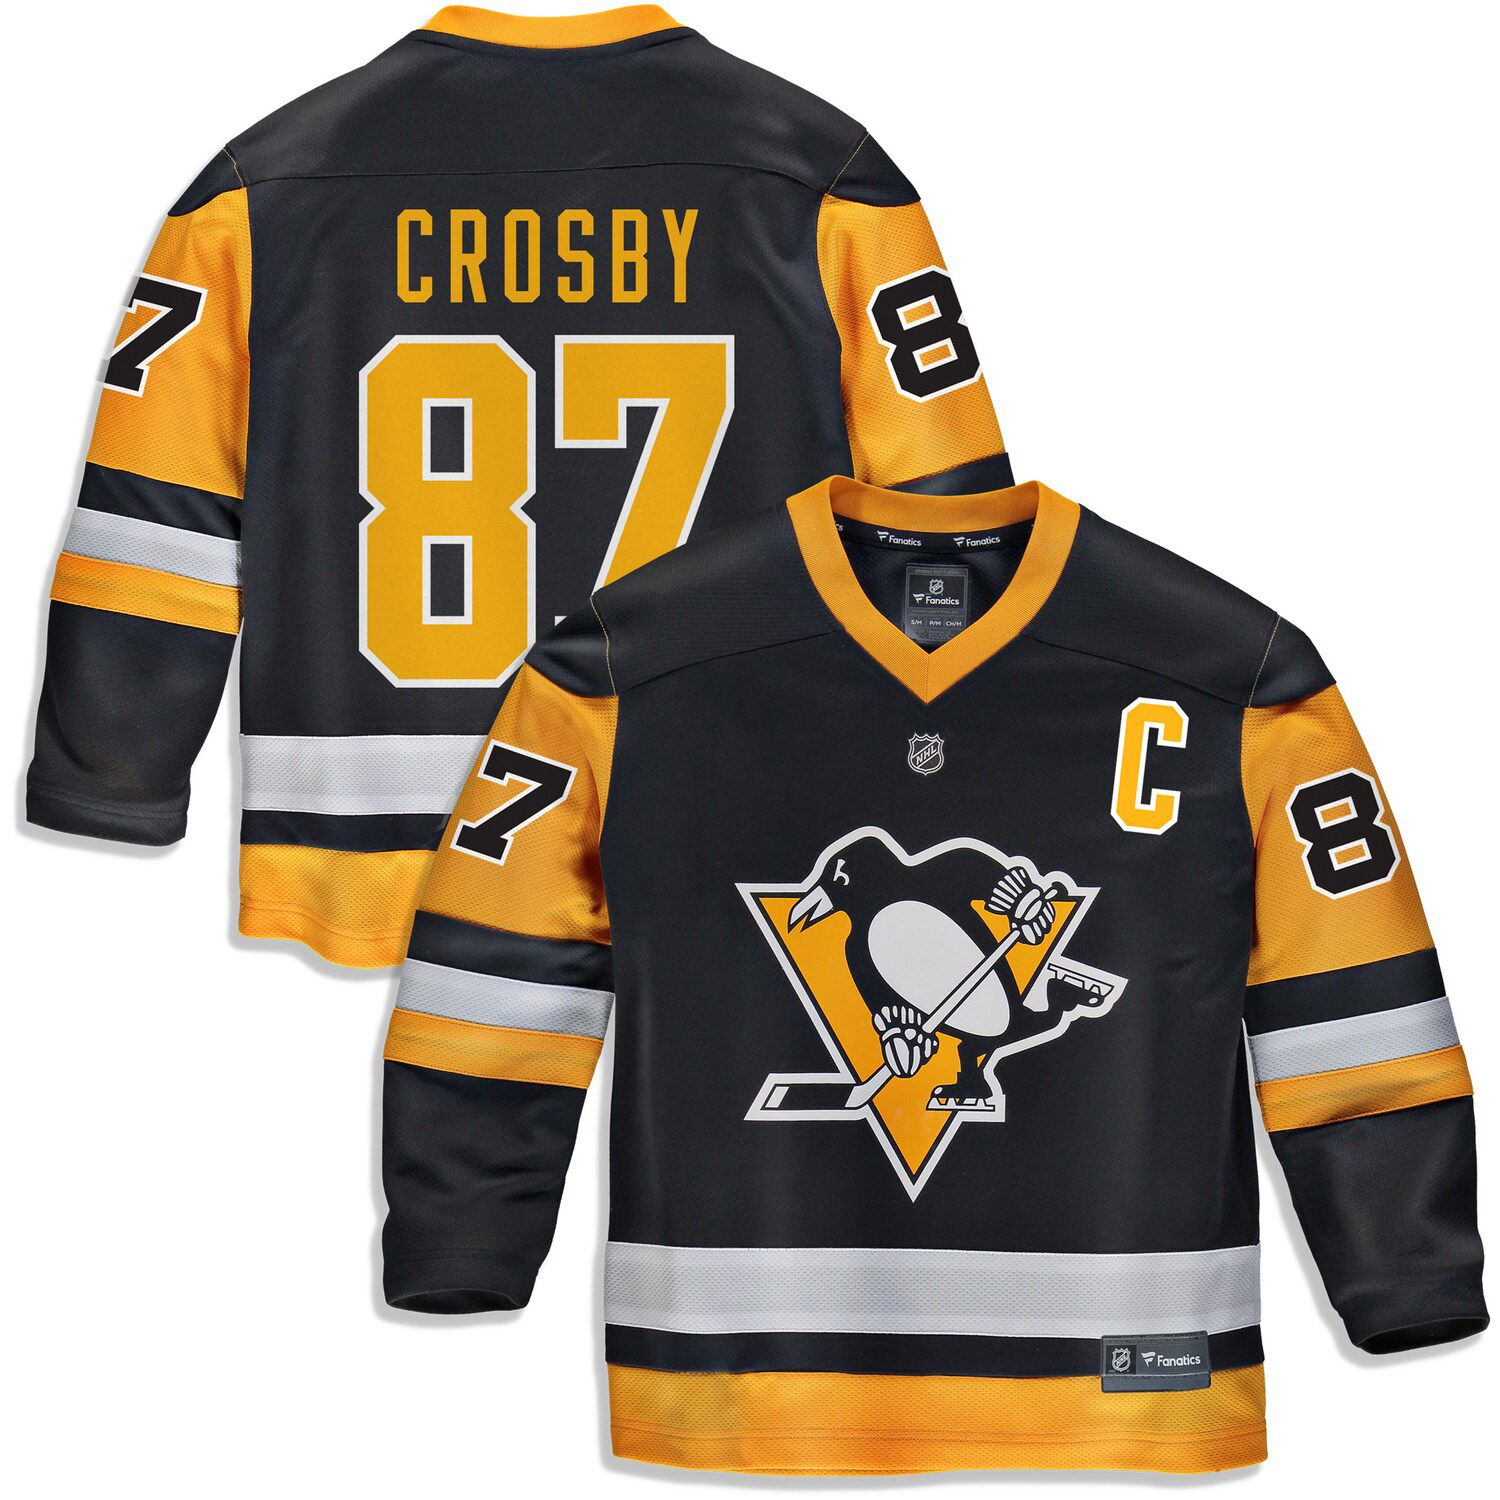 crosby replica jersey